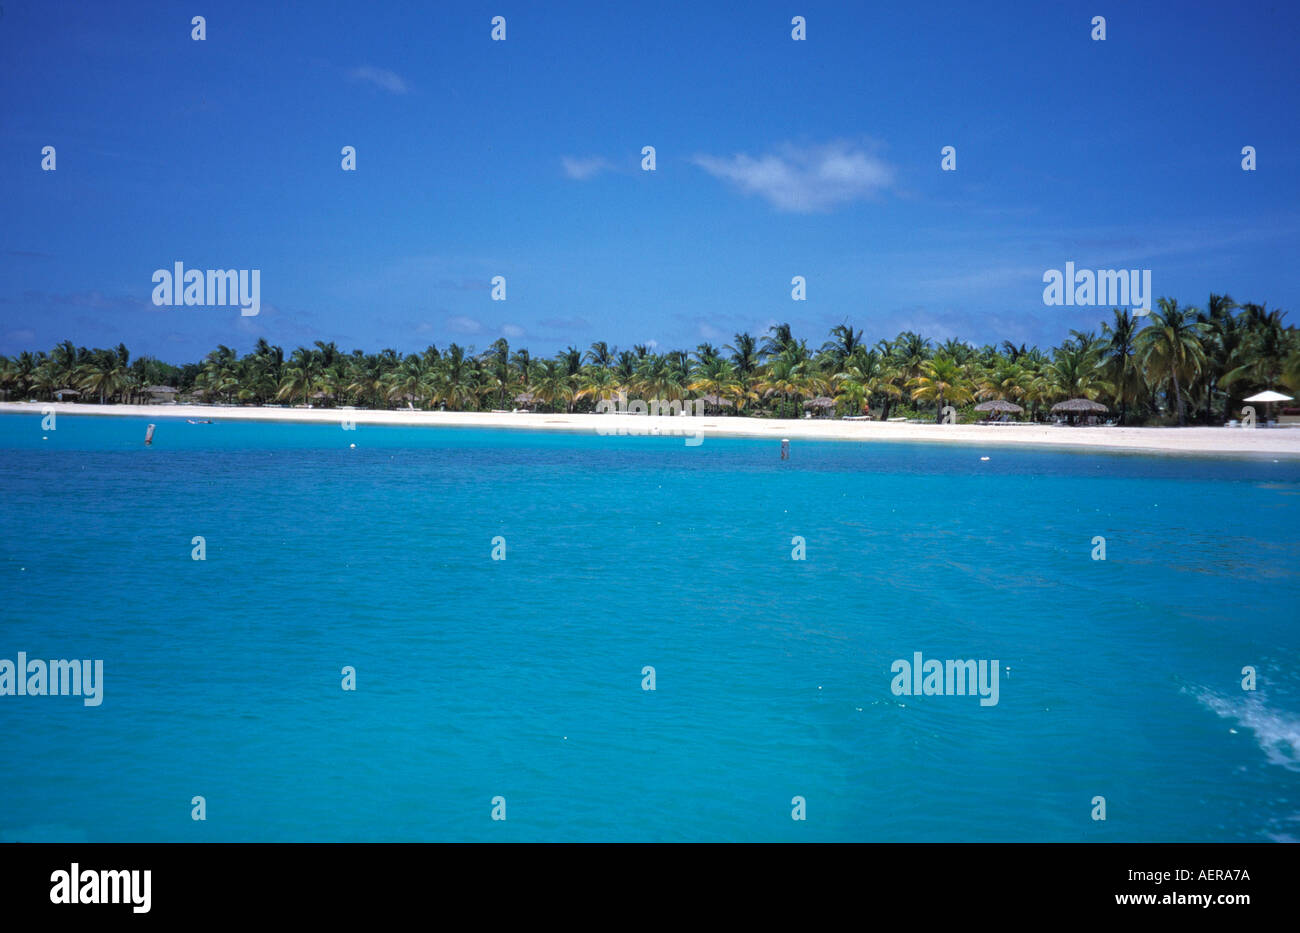 palmtrees at beach island of antigua archipelago of the lesser antilles caribbean Stock Photo